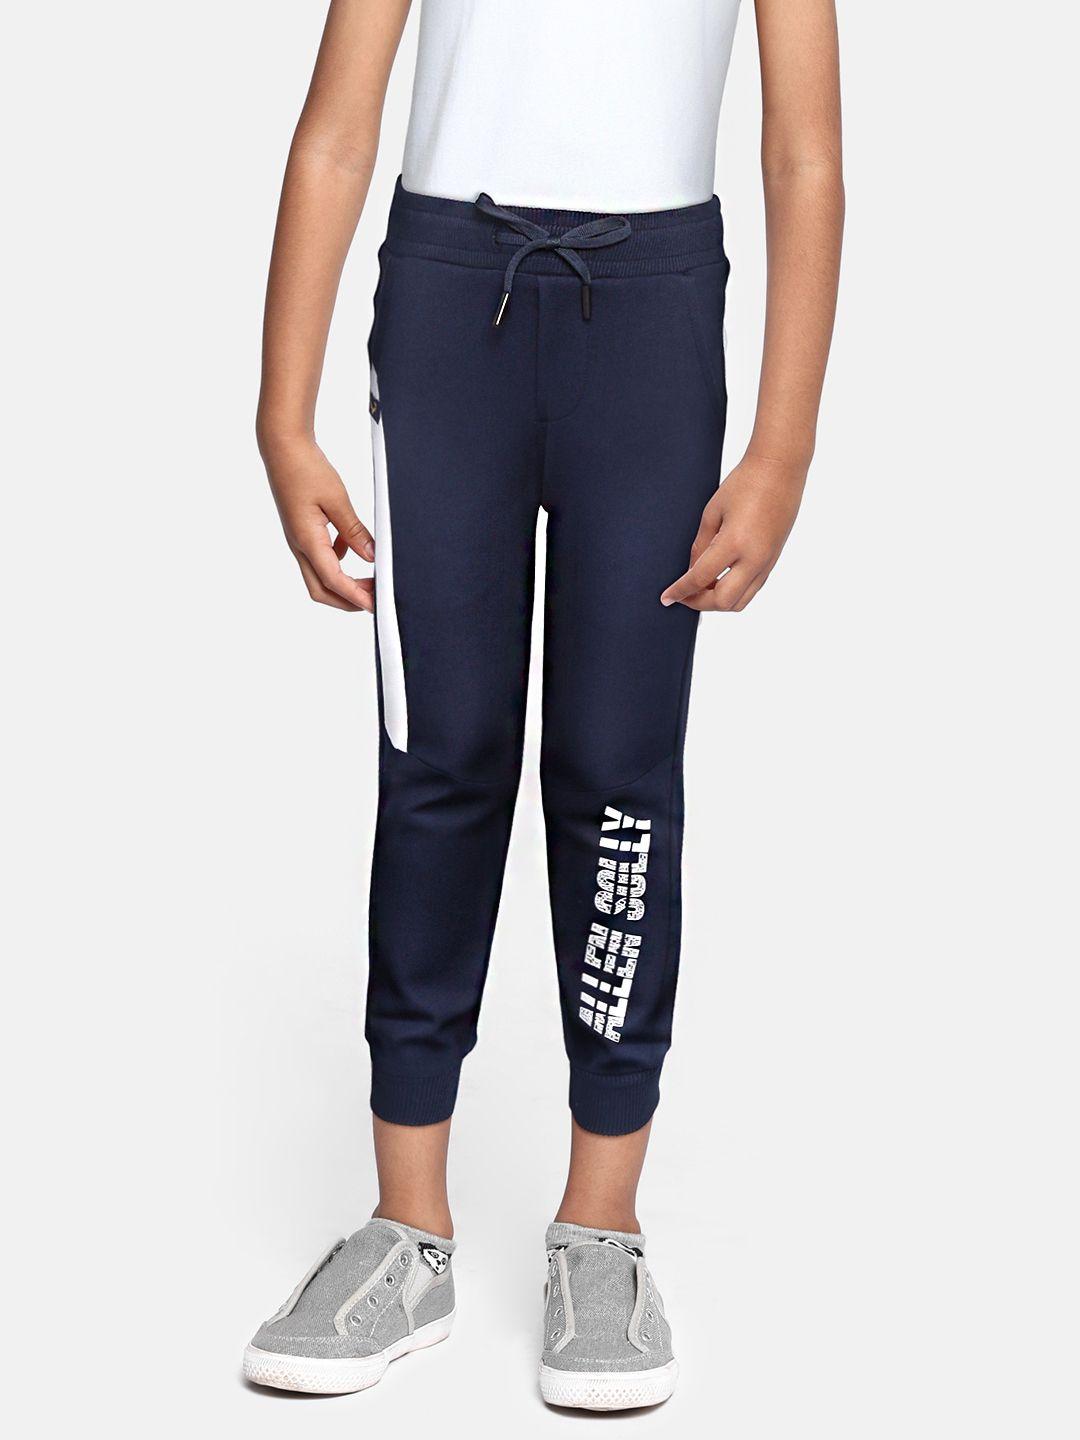 allen-solly-junior-boys-navy-blue-&-white-brand-logo-print-cotton-joggers